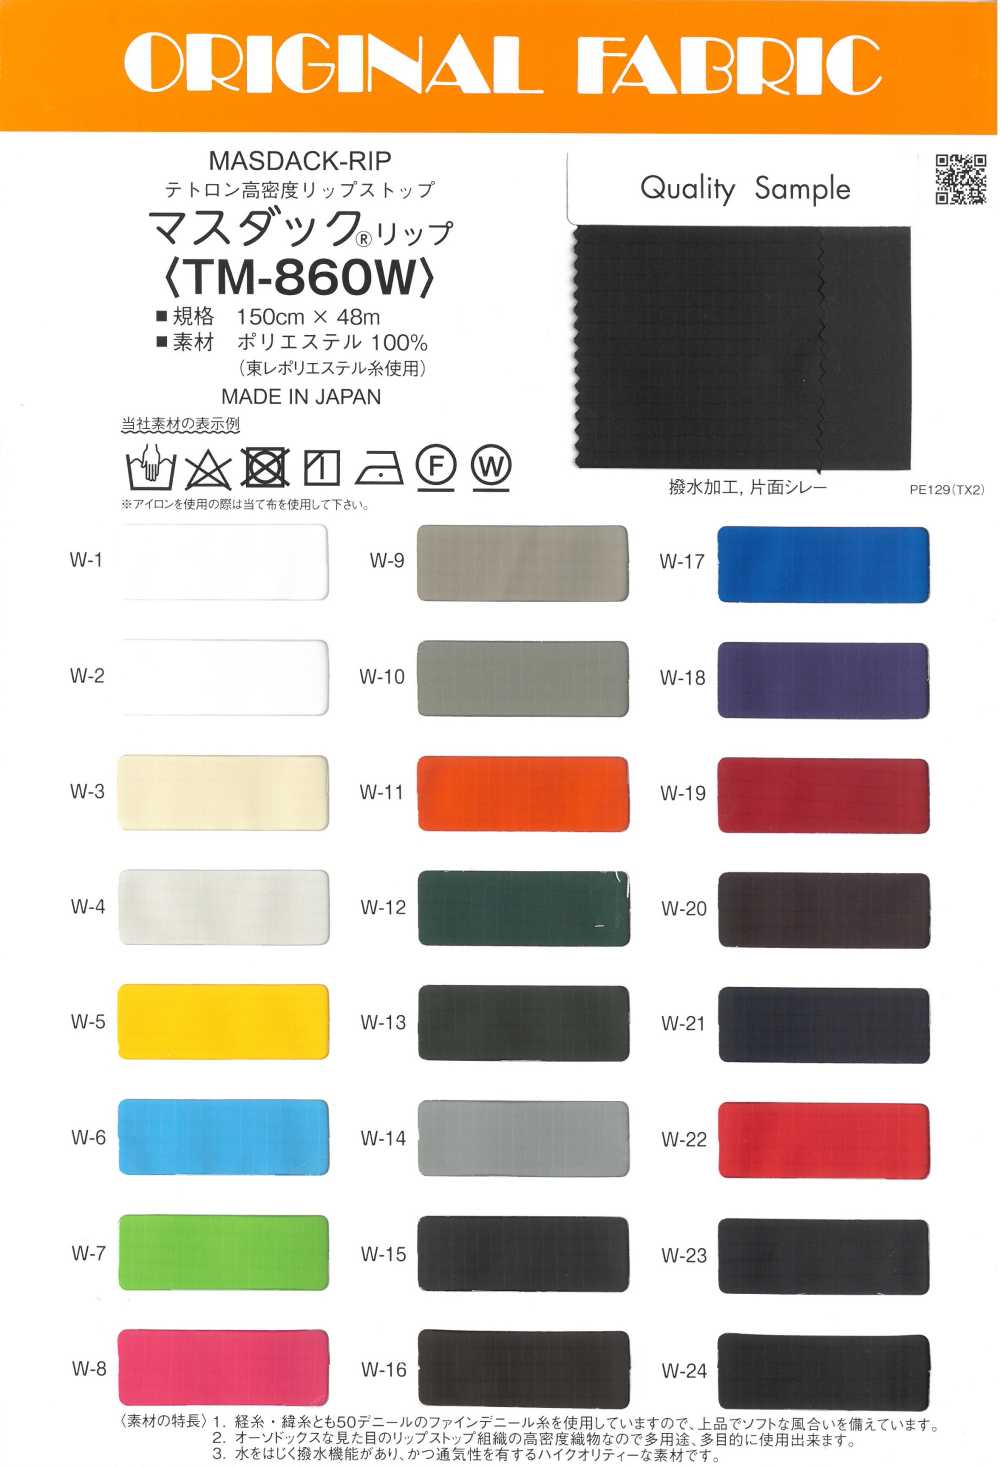 TM860W Masdaq® Lip Tetron Ripstop Haute Densité[Fabrication De Textile] Masuda